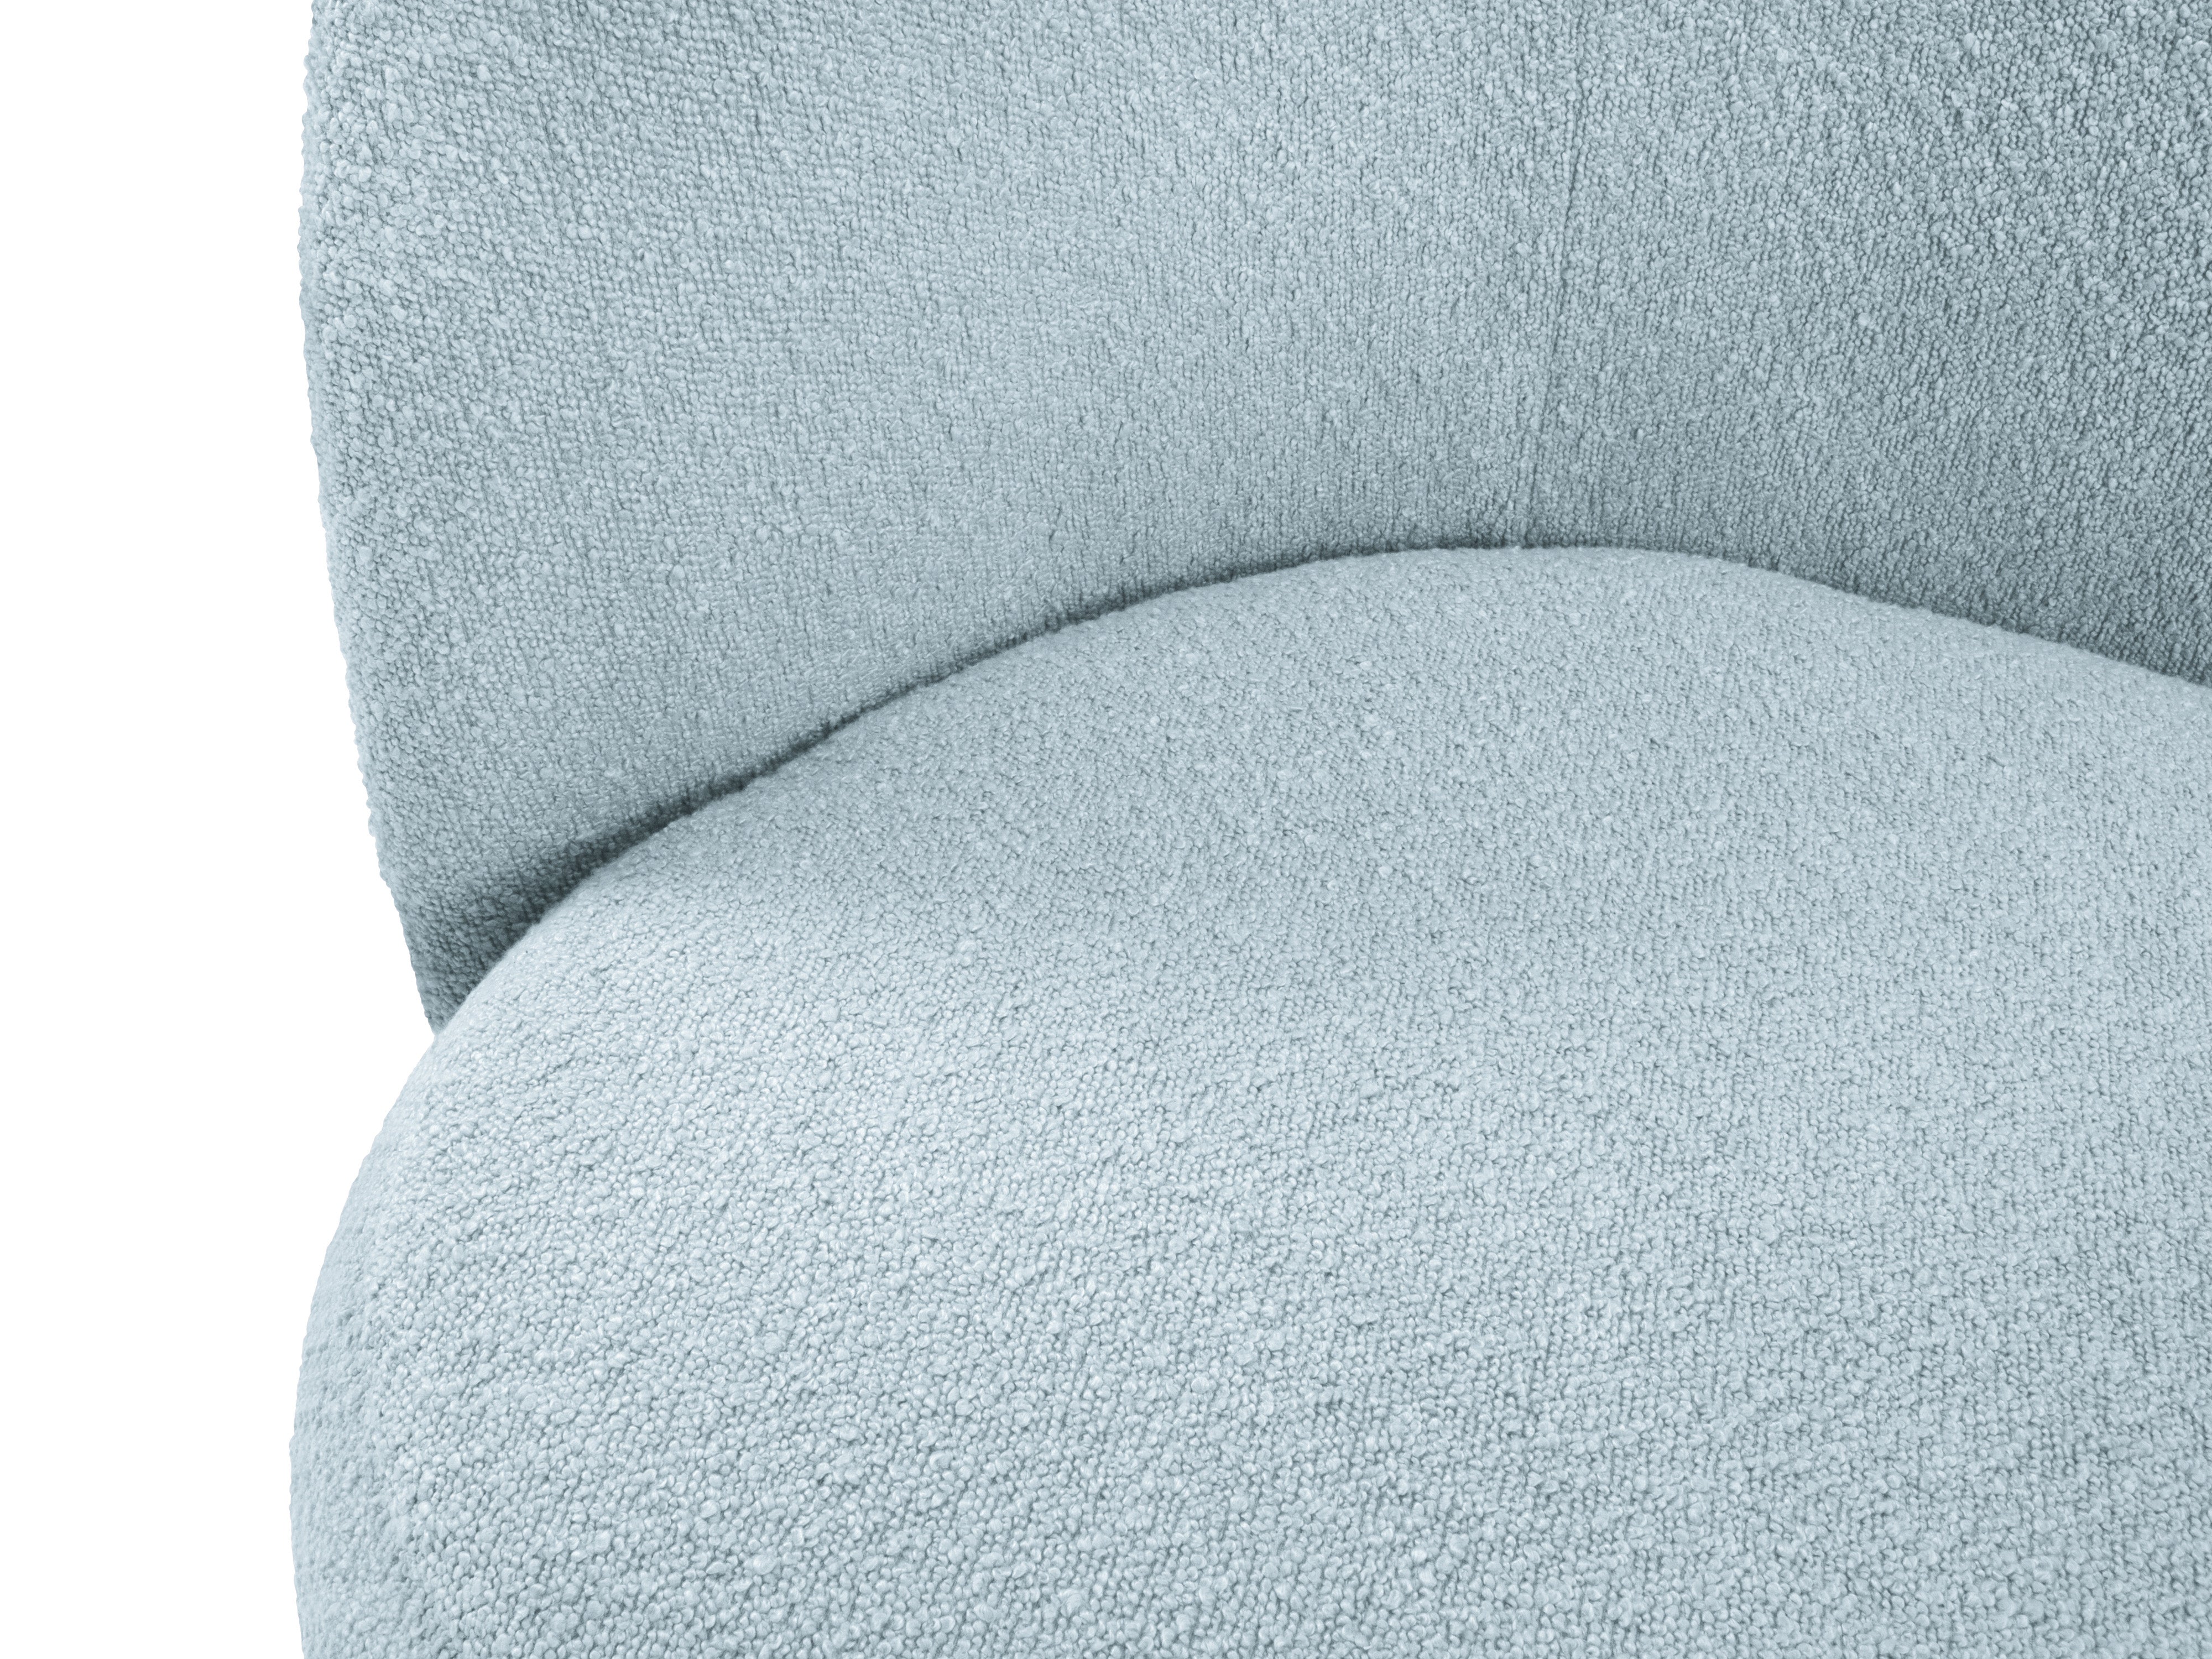 Sofa 2-osobowa CLOVE jasnoniebieski boucle Mazzini Sofas    Eye on Design